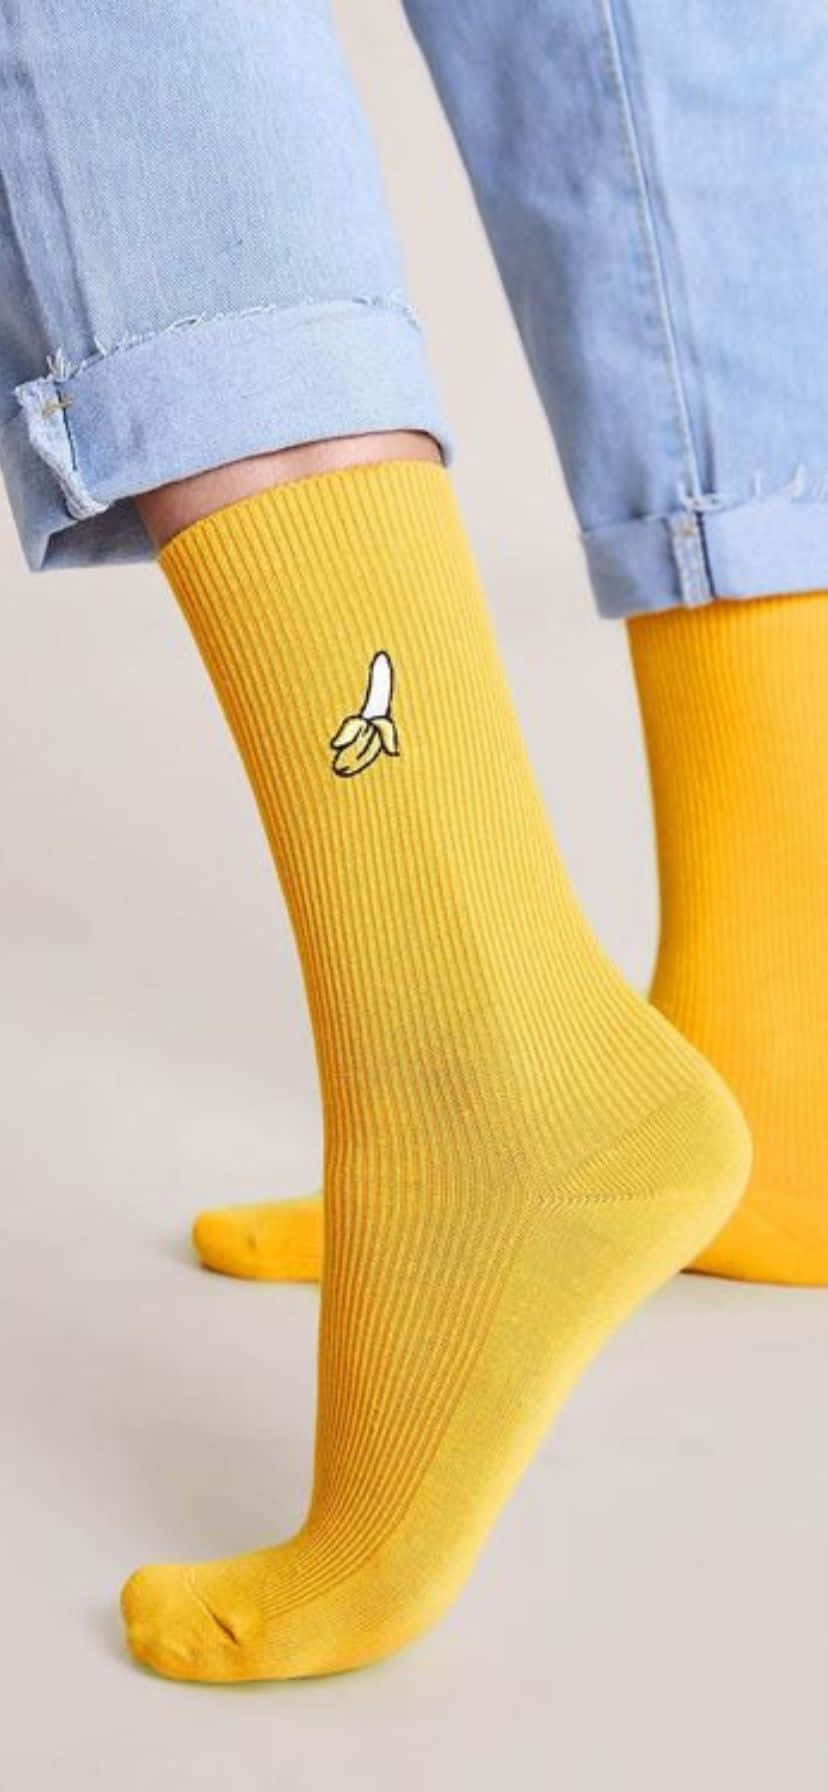 Yellow Banana Embroidered Socks Wallpaper